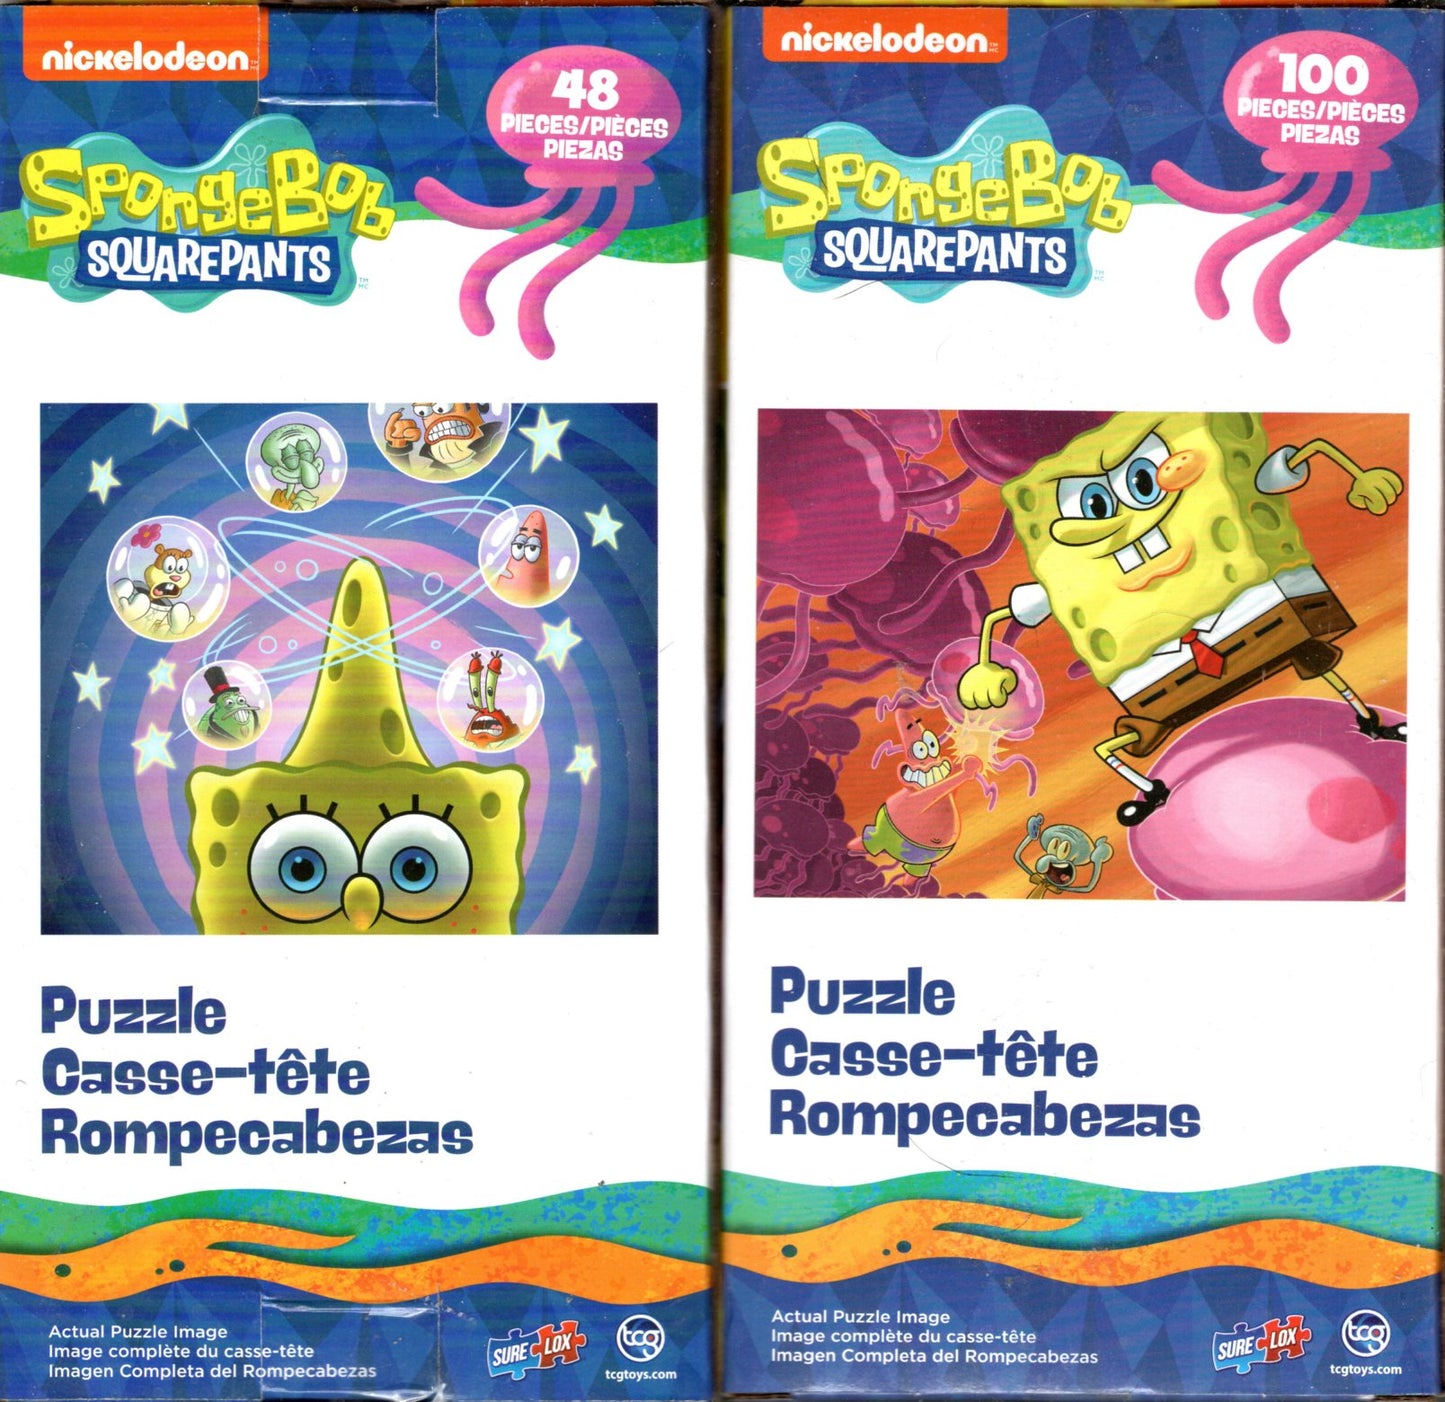 Nickelodeon SpongeBob SquarePants - 48 + 100 Pieces Jigsaw Puzzle (Set of 2)